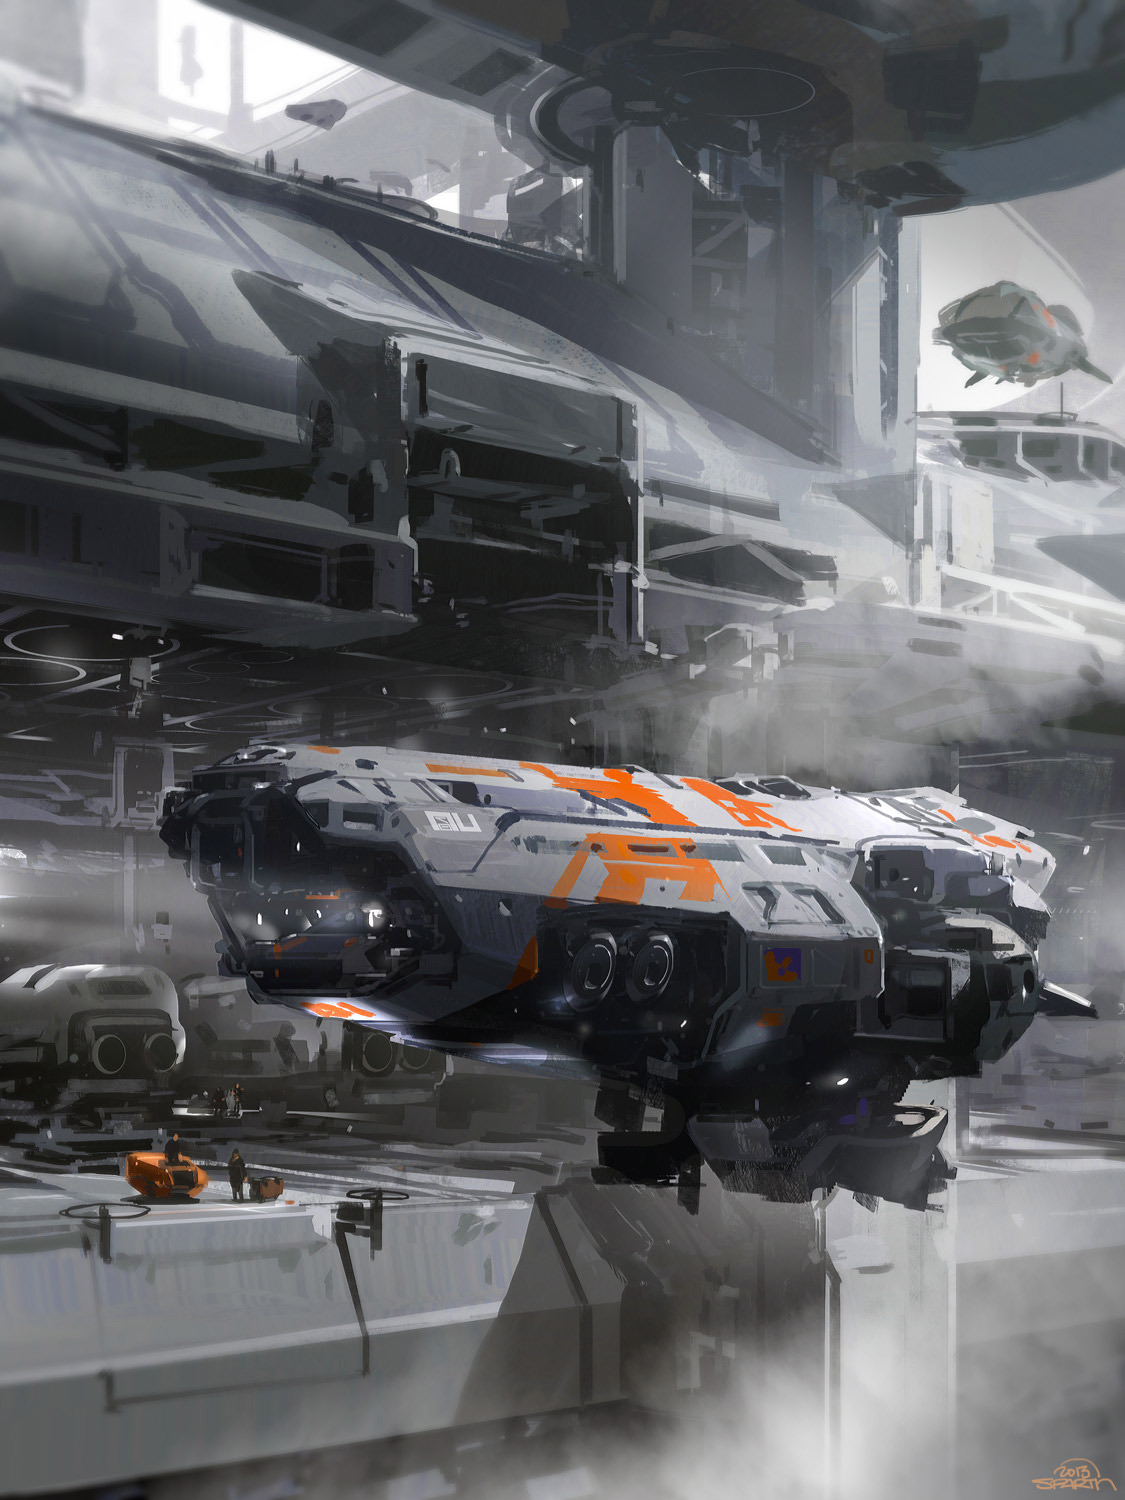 concept ships: Concept spaceship art by SPARTH